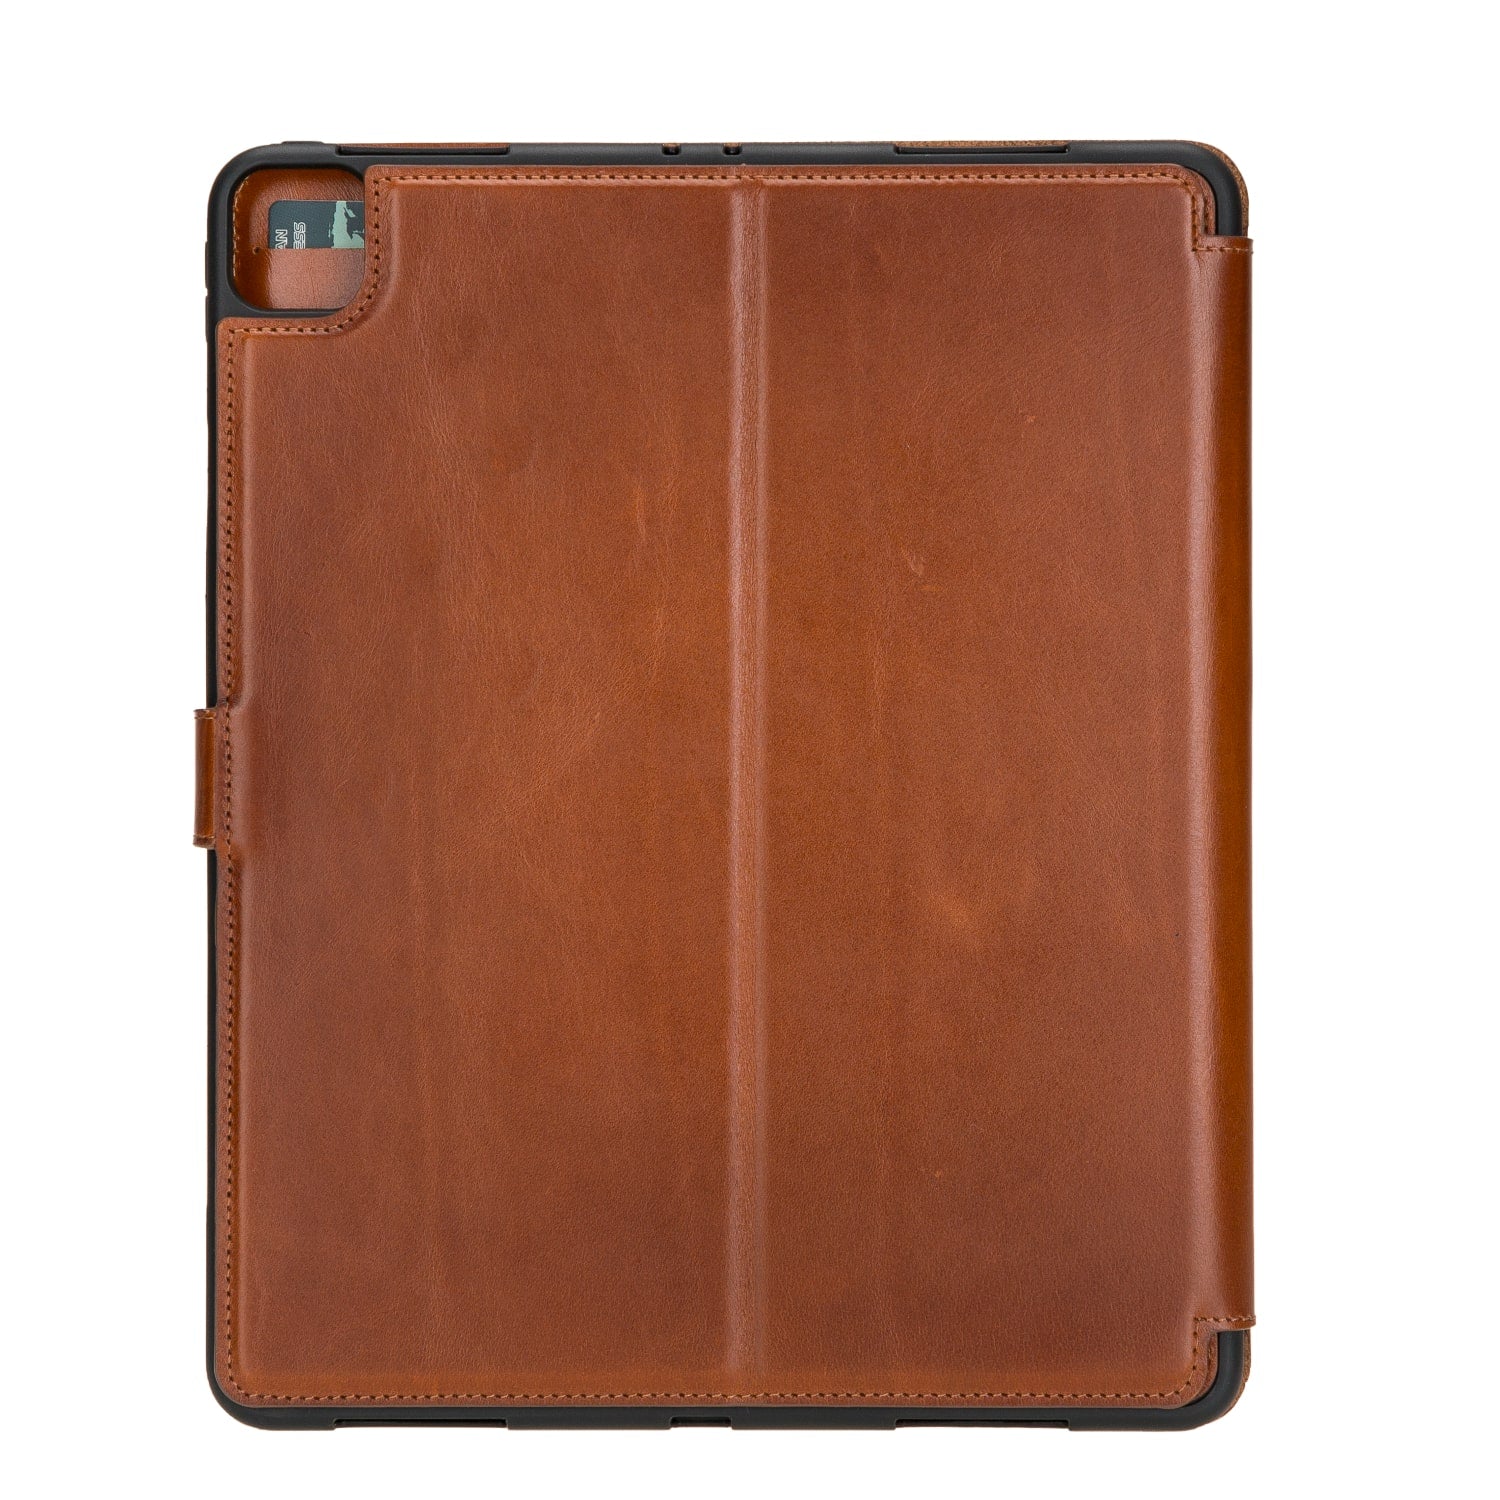 Brown Leather iPad Pro 12.9 Inc Smart Folio Case with Apple Pen Holder - Bomonti - 4